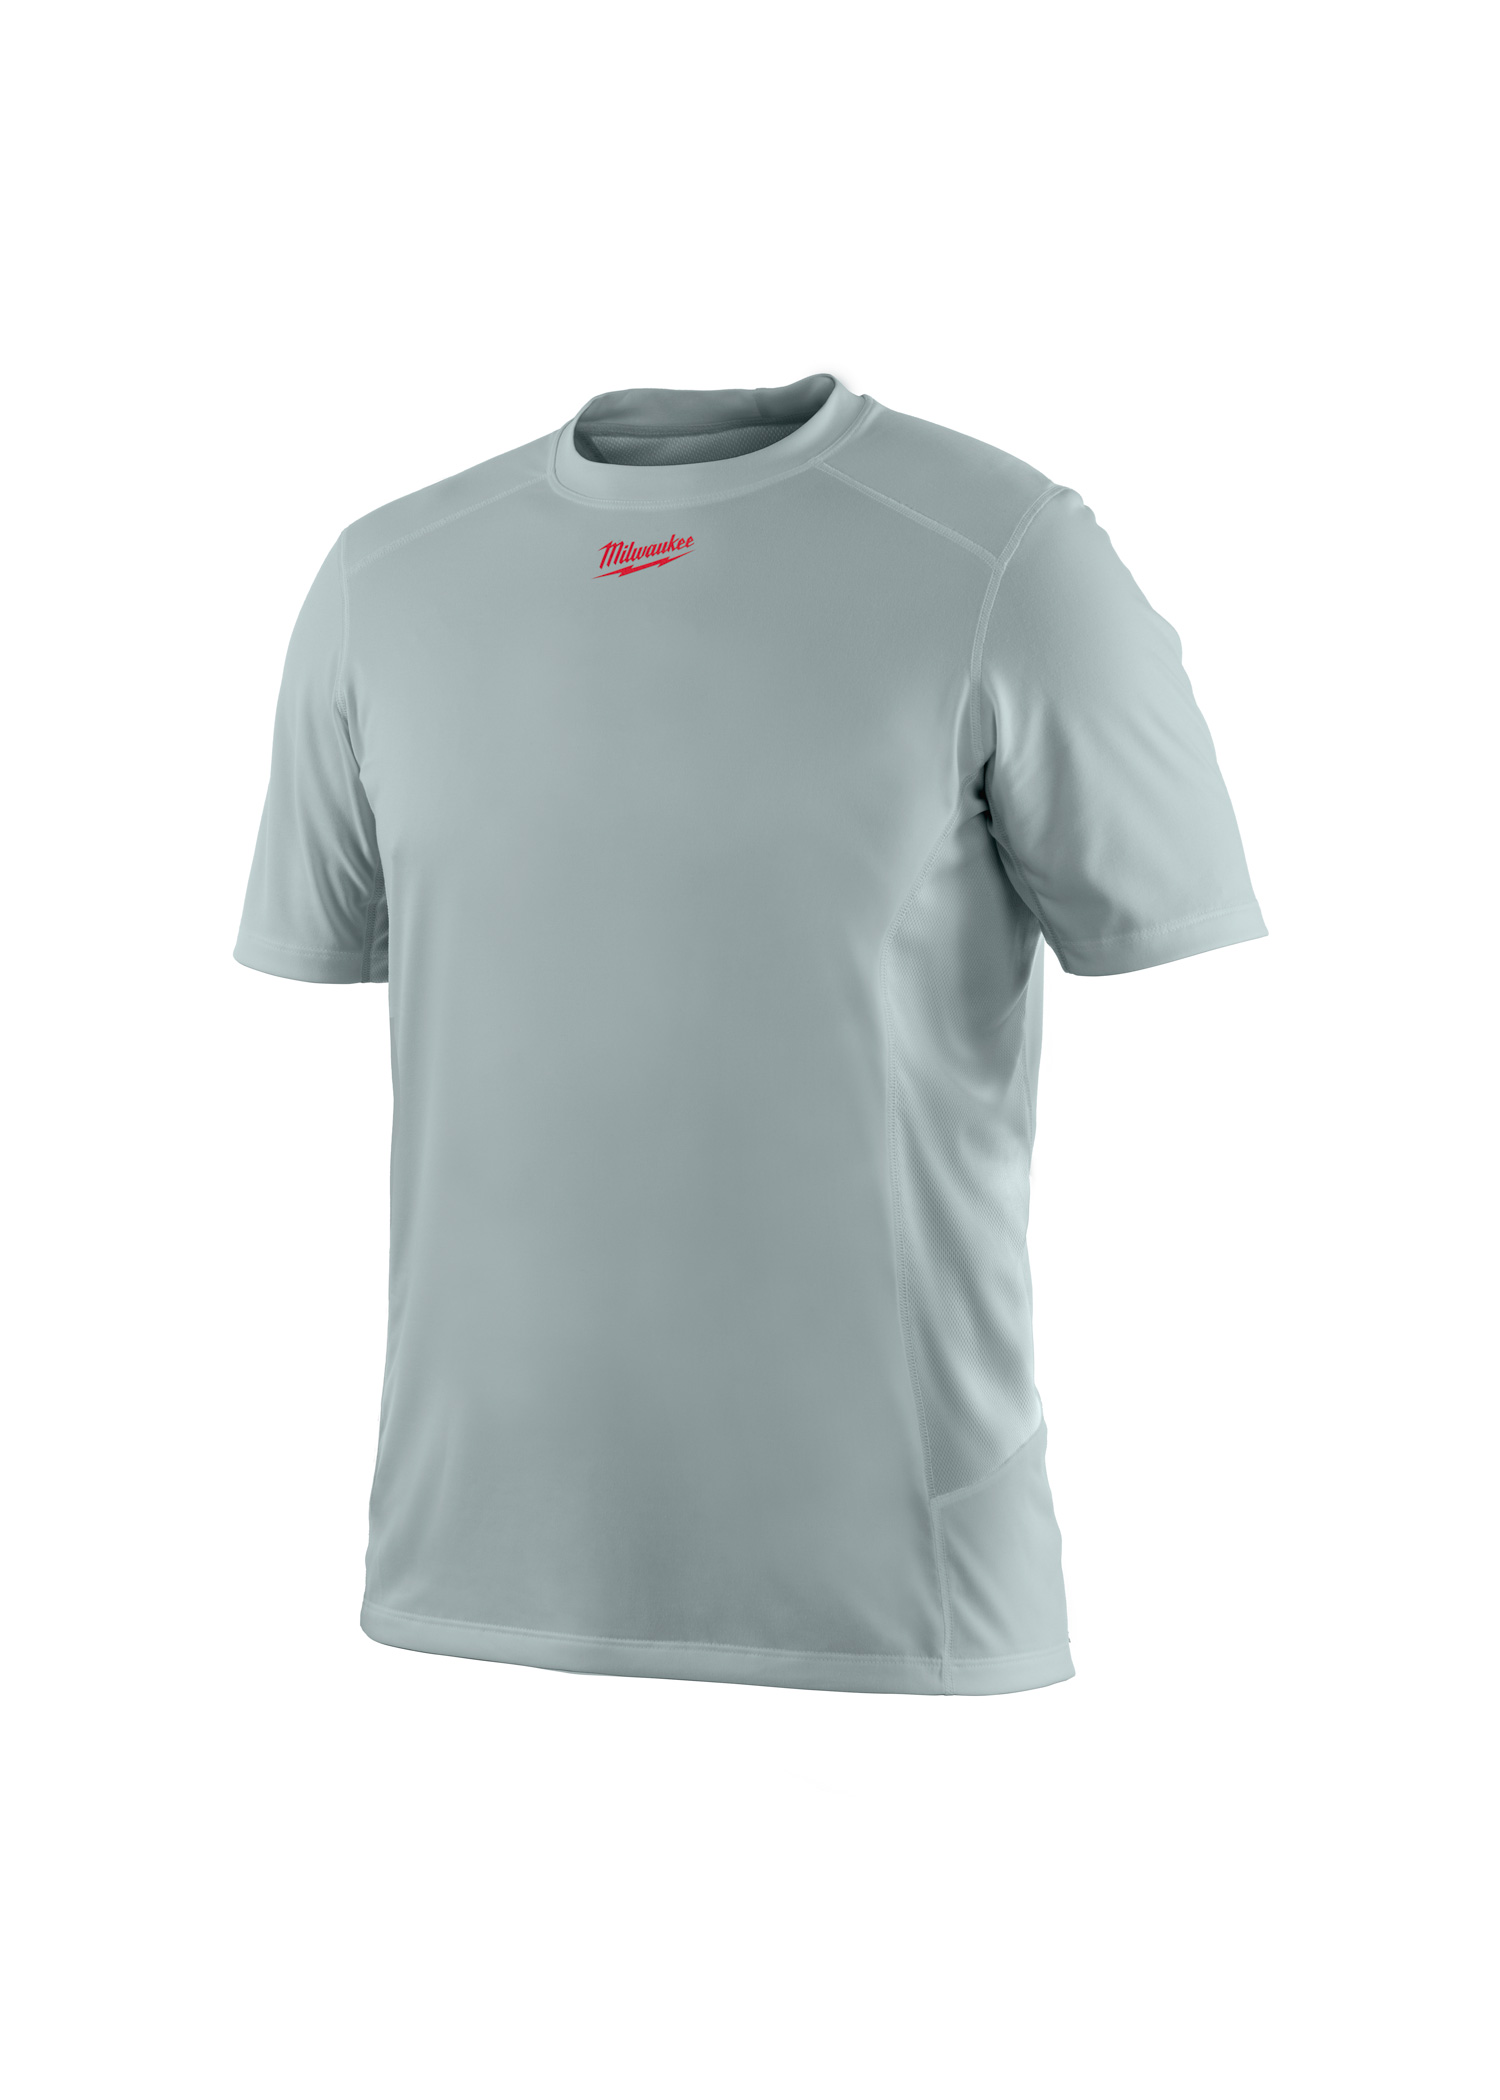 WorkSkin™ Light Weight Performance Shirt - Gray Image